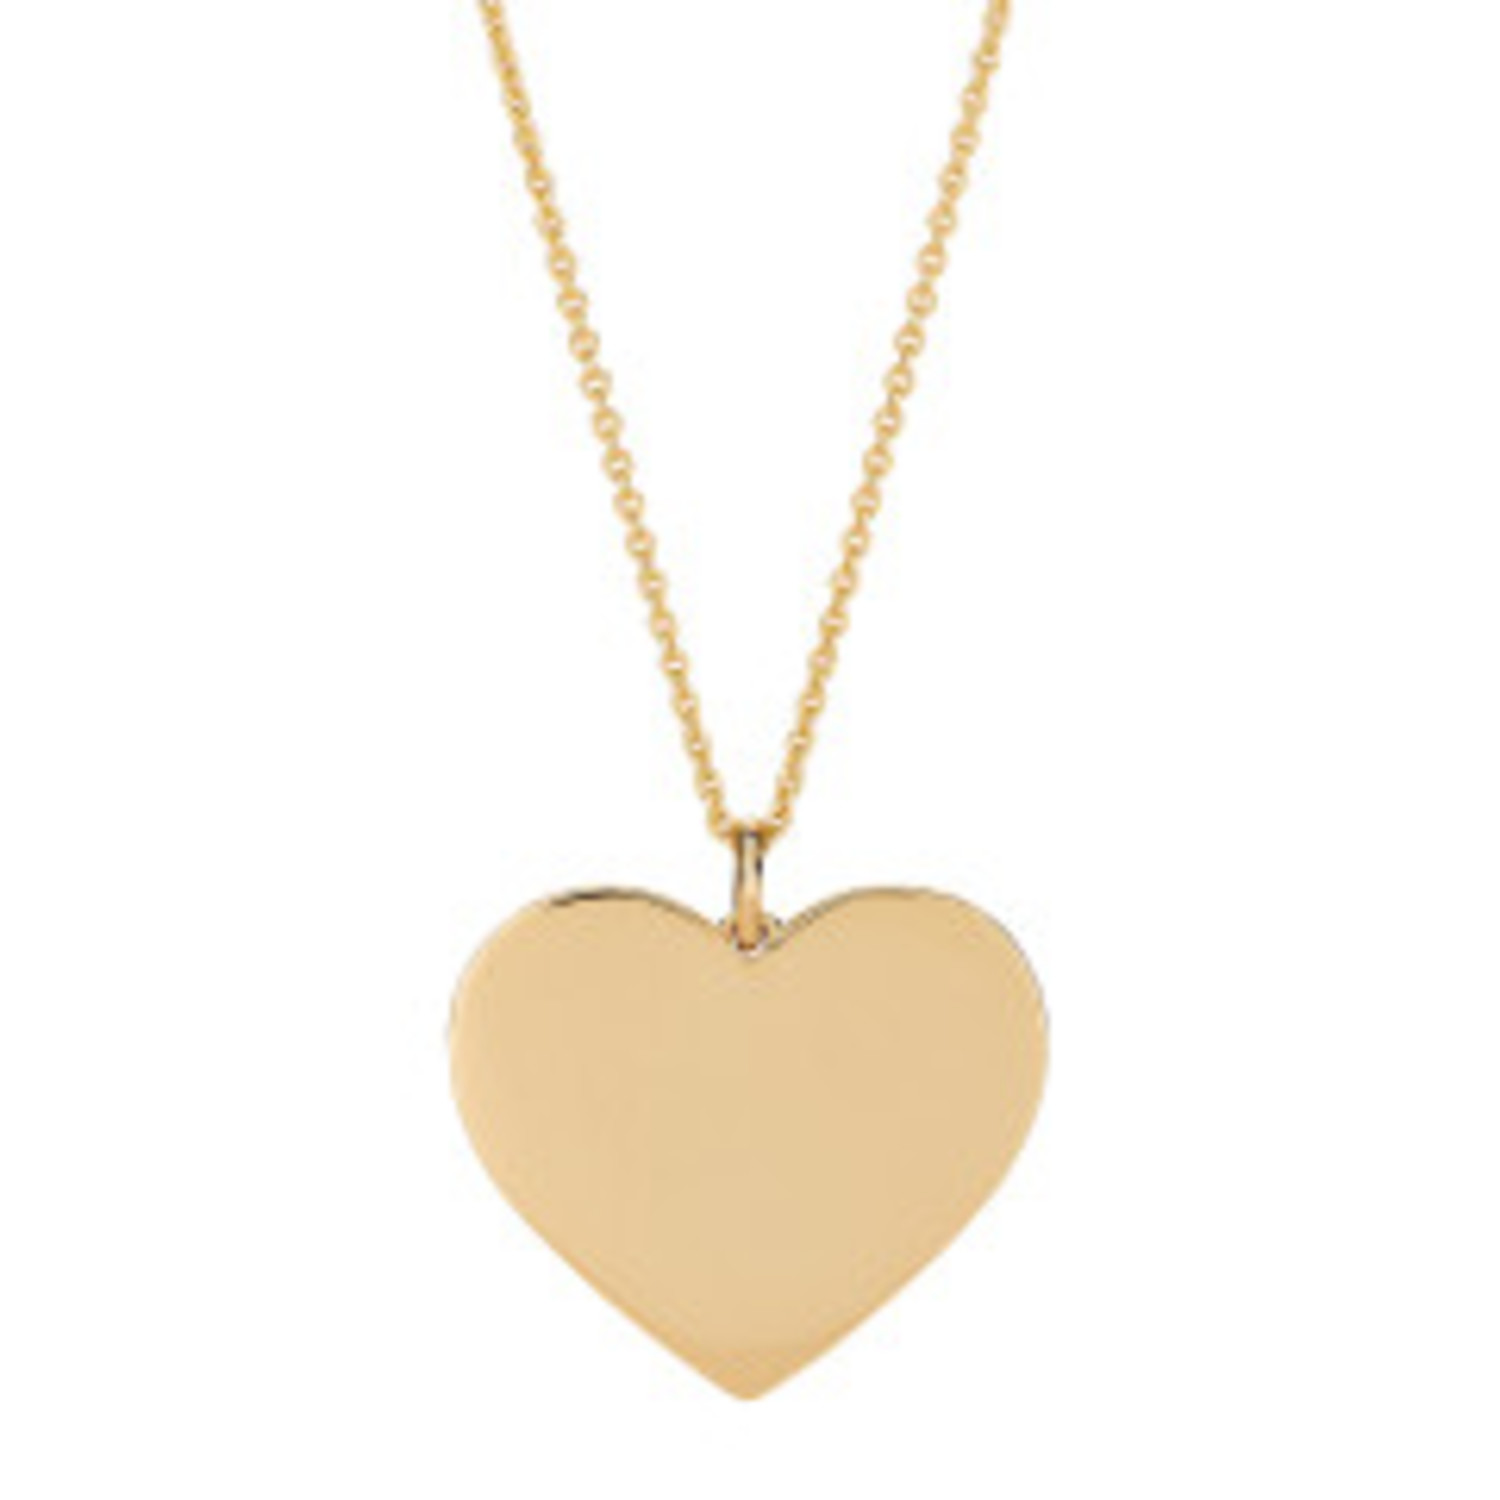 Engravable Large Heart Charm in 14K Gold - M. Flynn